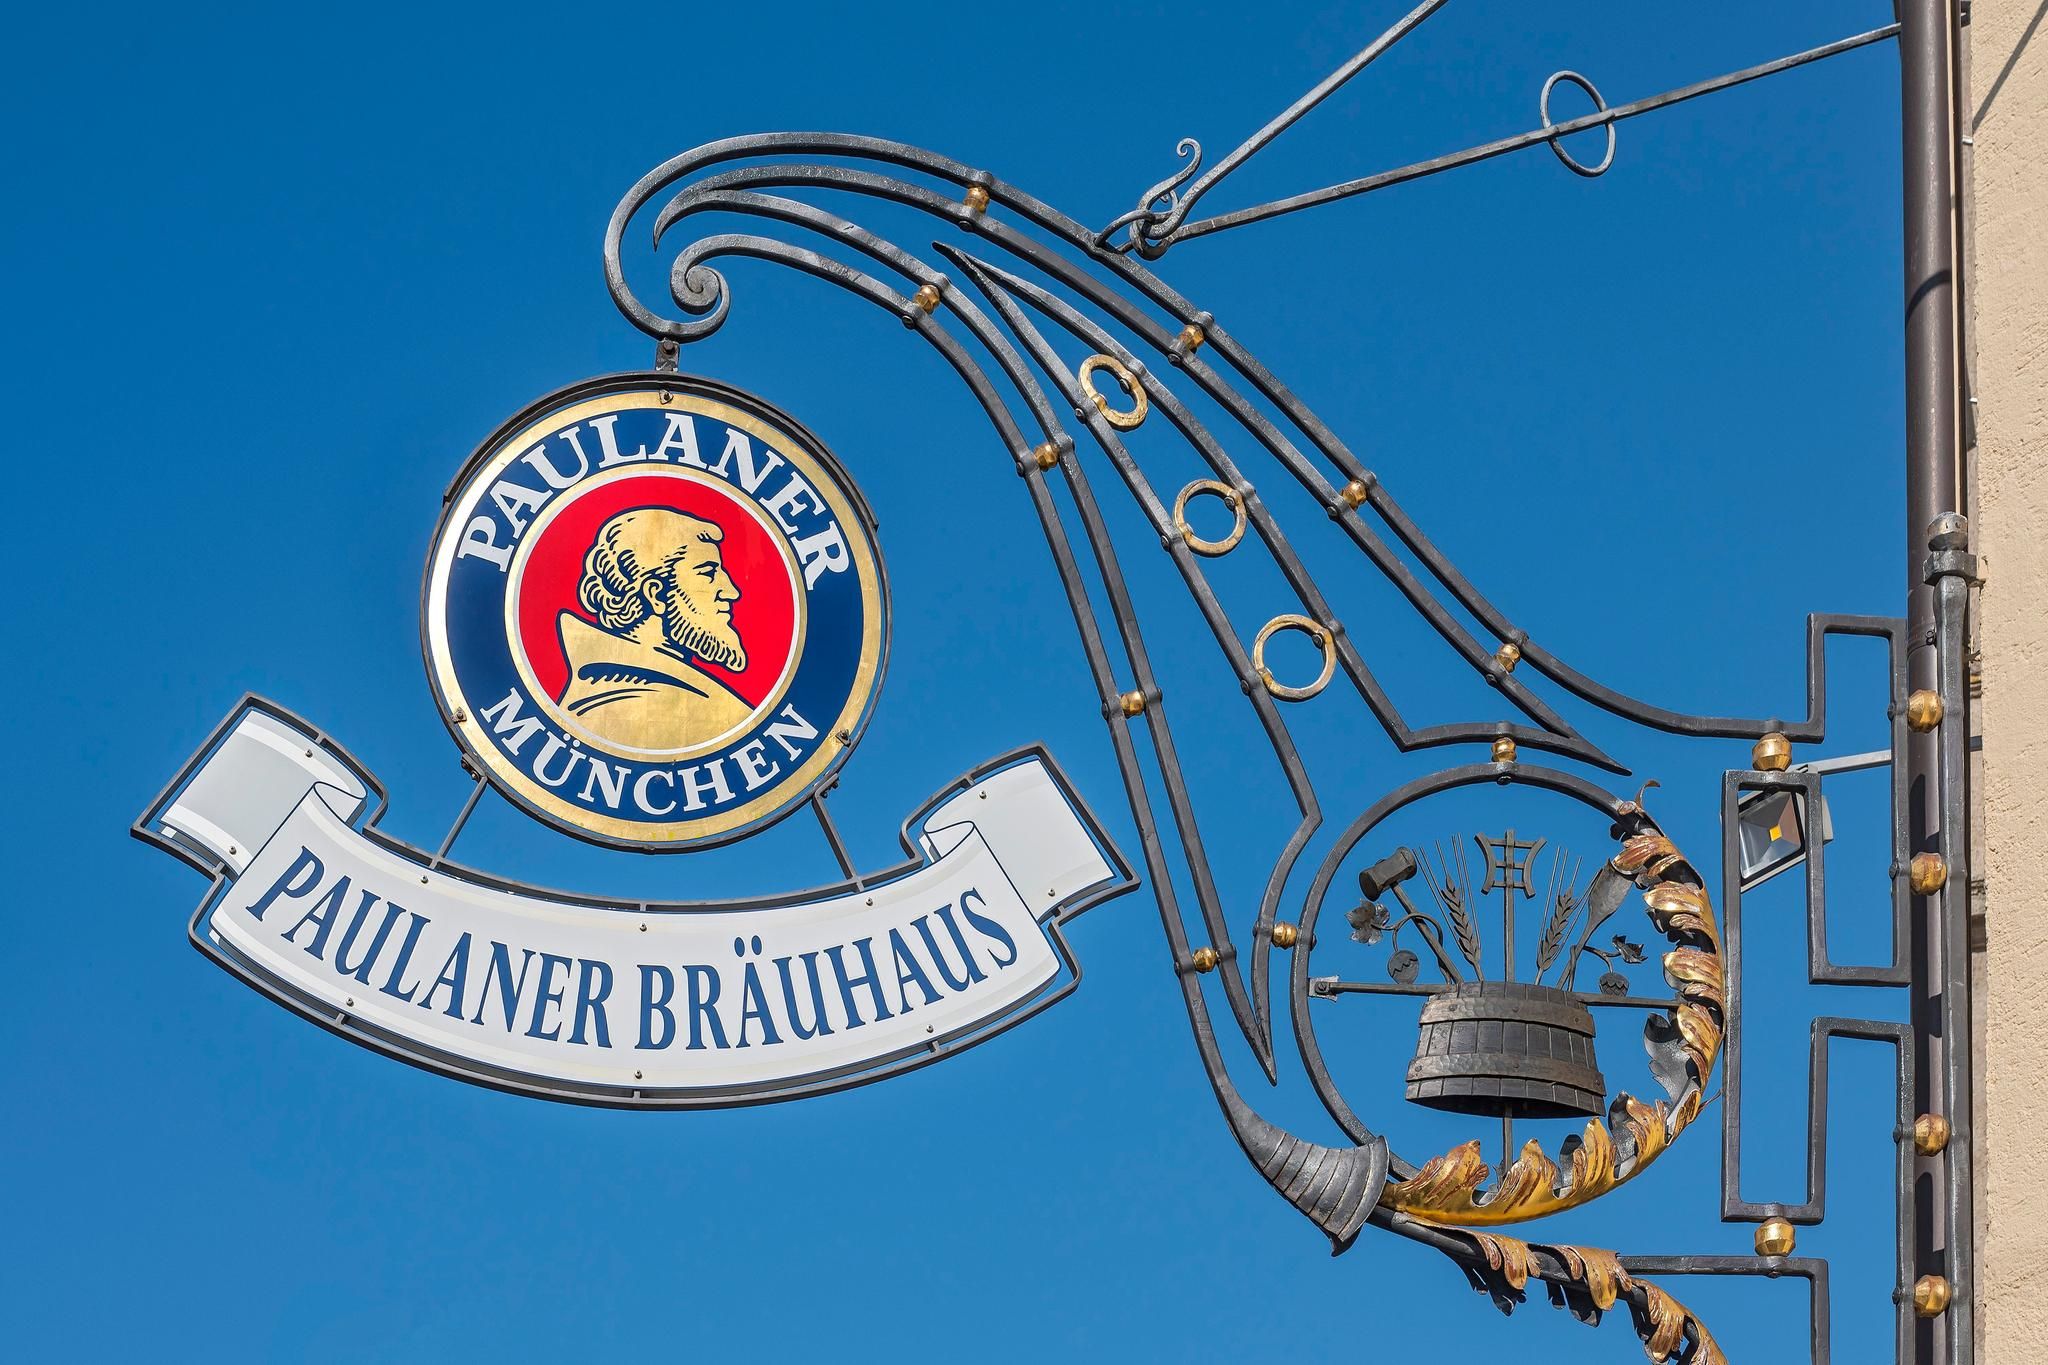 Paulaner Brauerei - weltweit bekannt, regional engagiert 